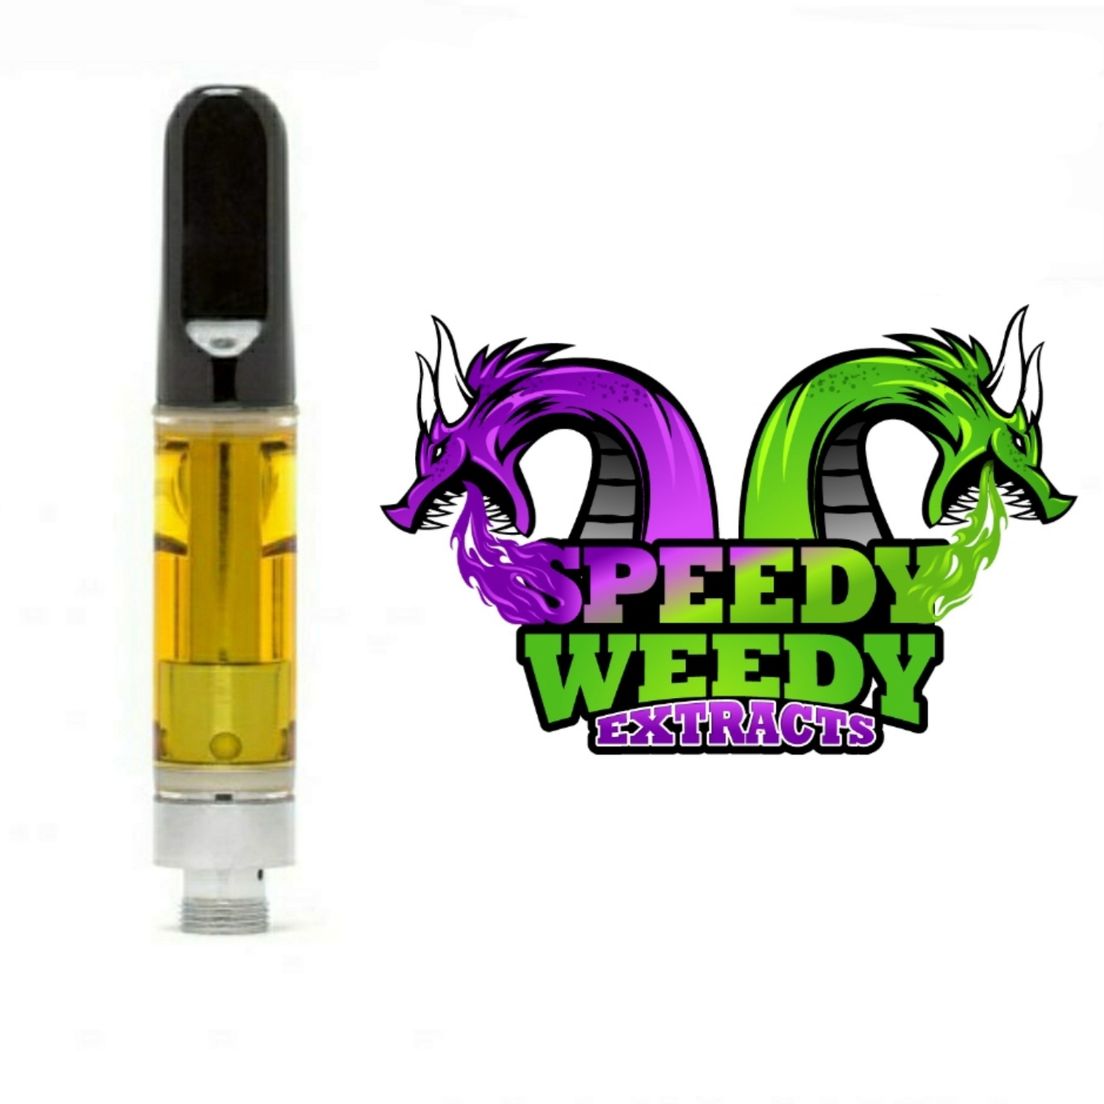 1. Speedy Weedy 1g THC Vape Cartridge - Grand Daddy Purple (I) 3/$60 Mix/Match